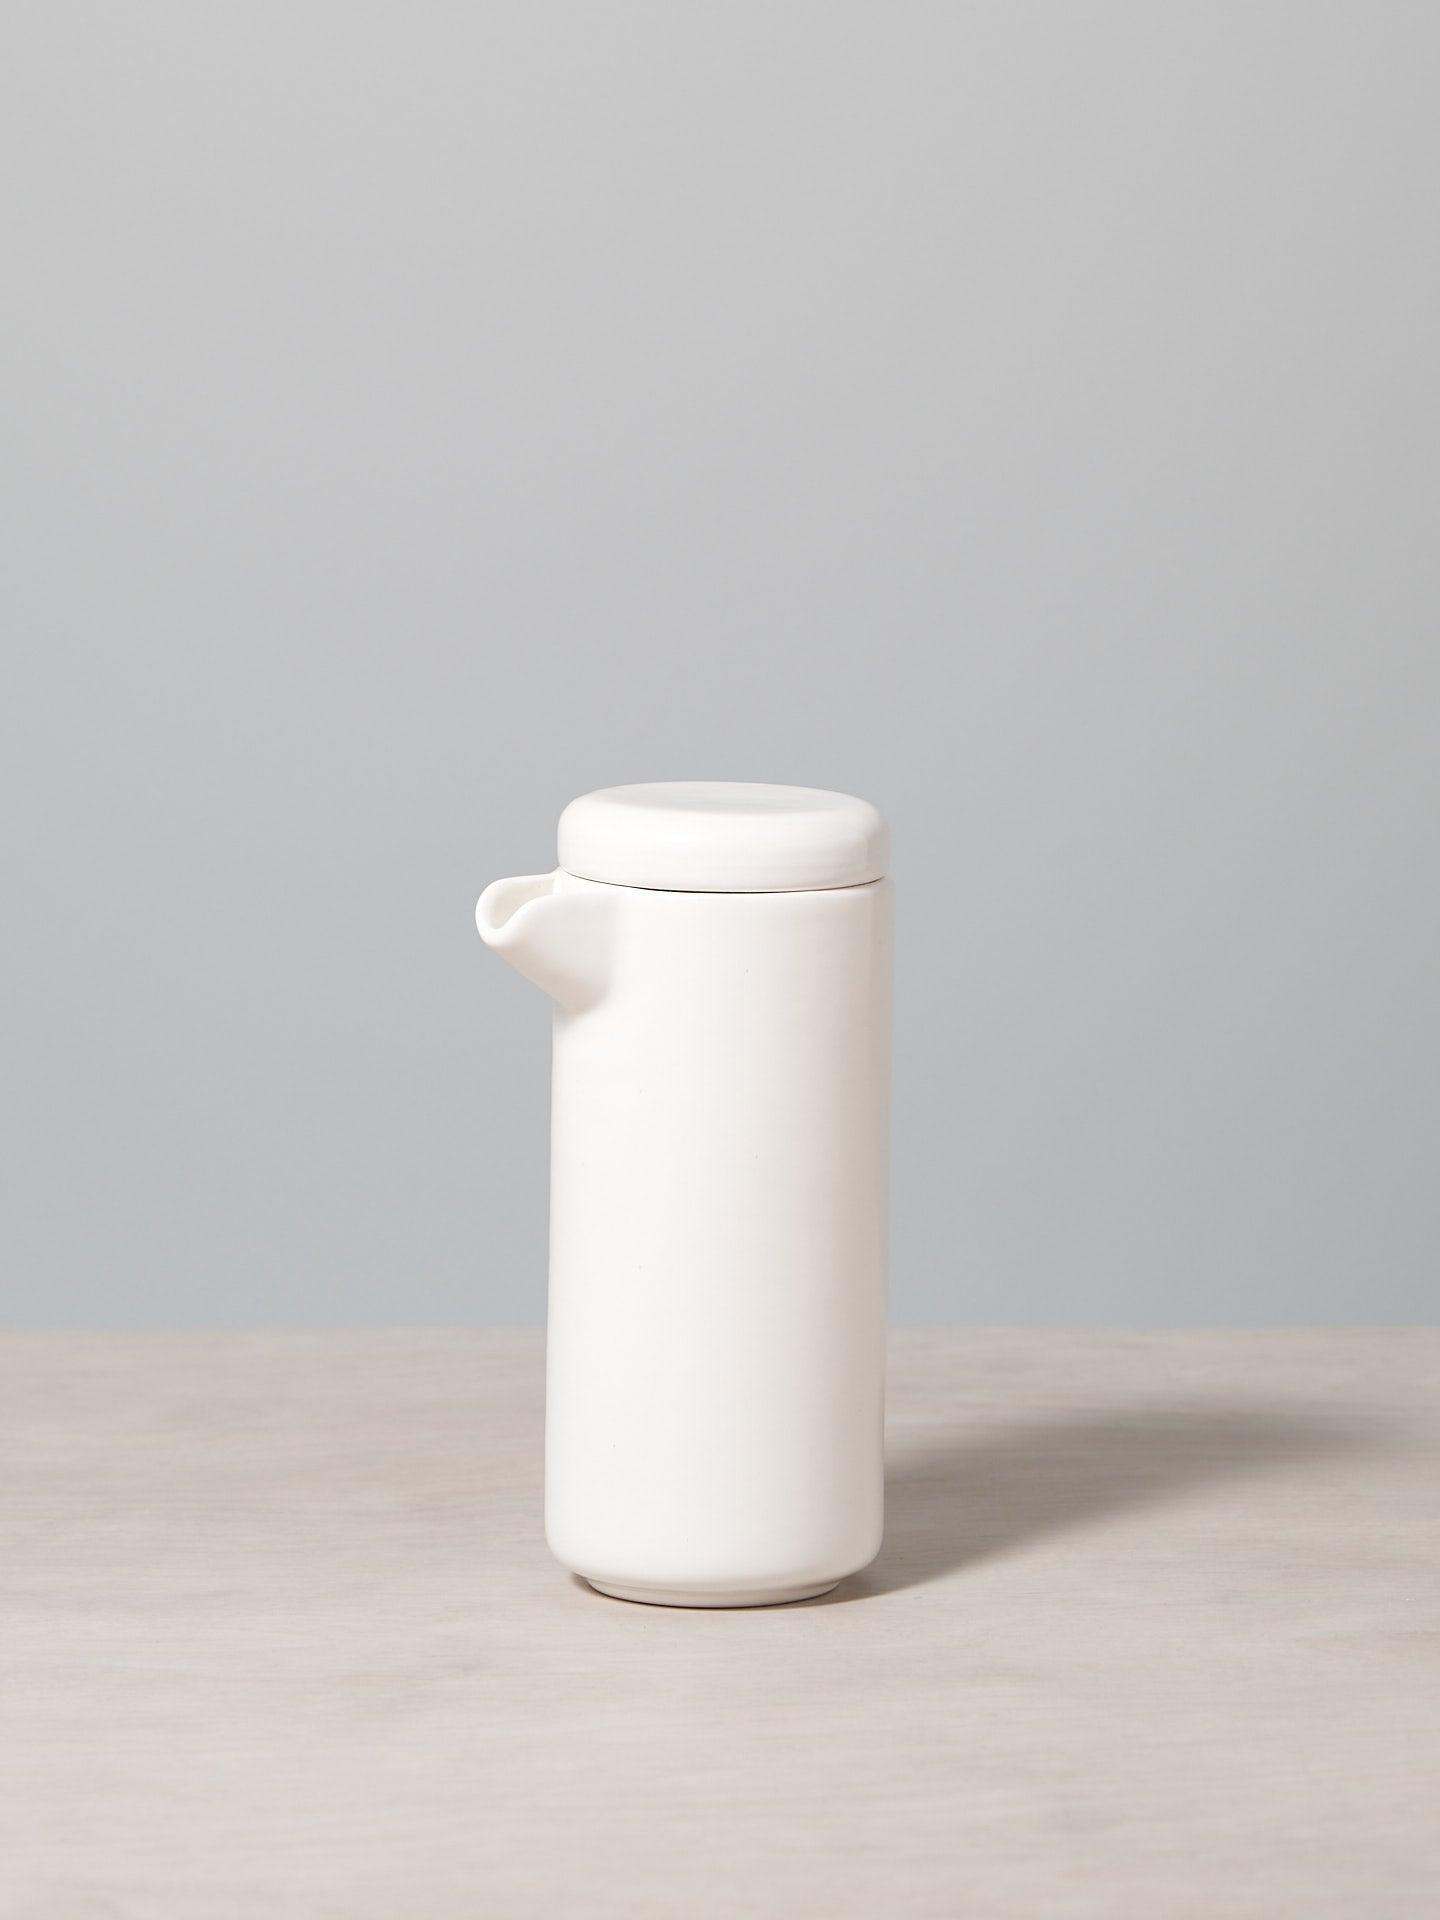 A Small Twin Wall Coffee/Tea Pot – Satin White by Gidon Bing sitting on a table.